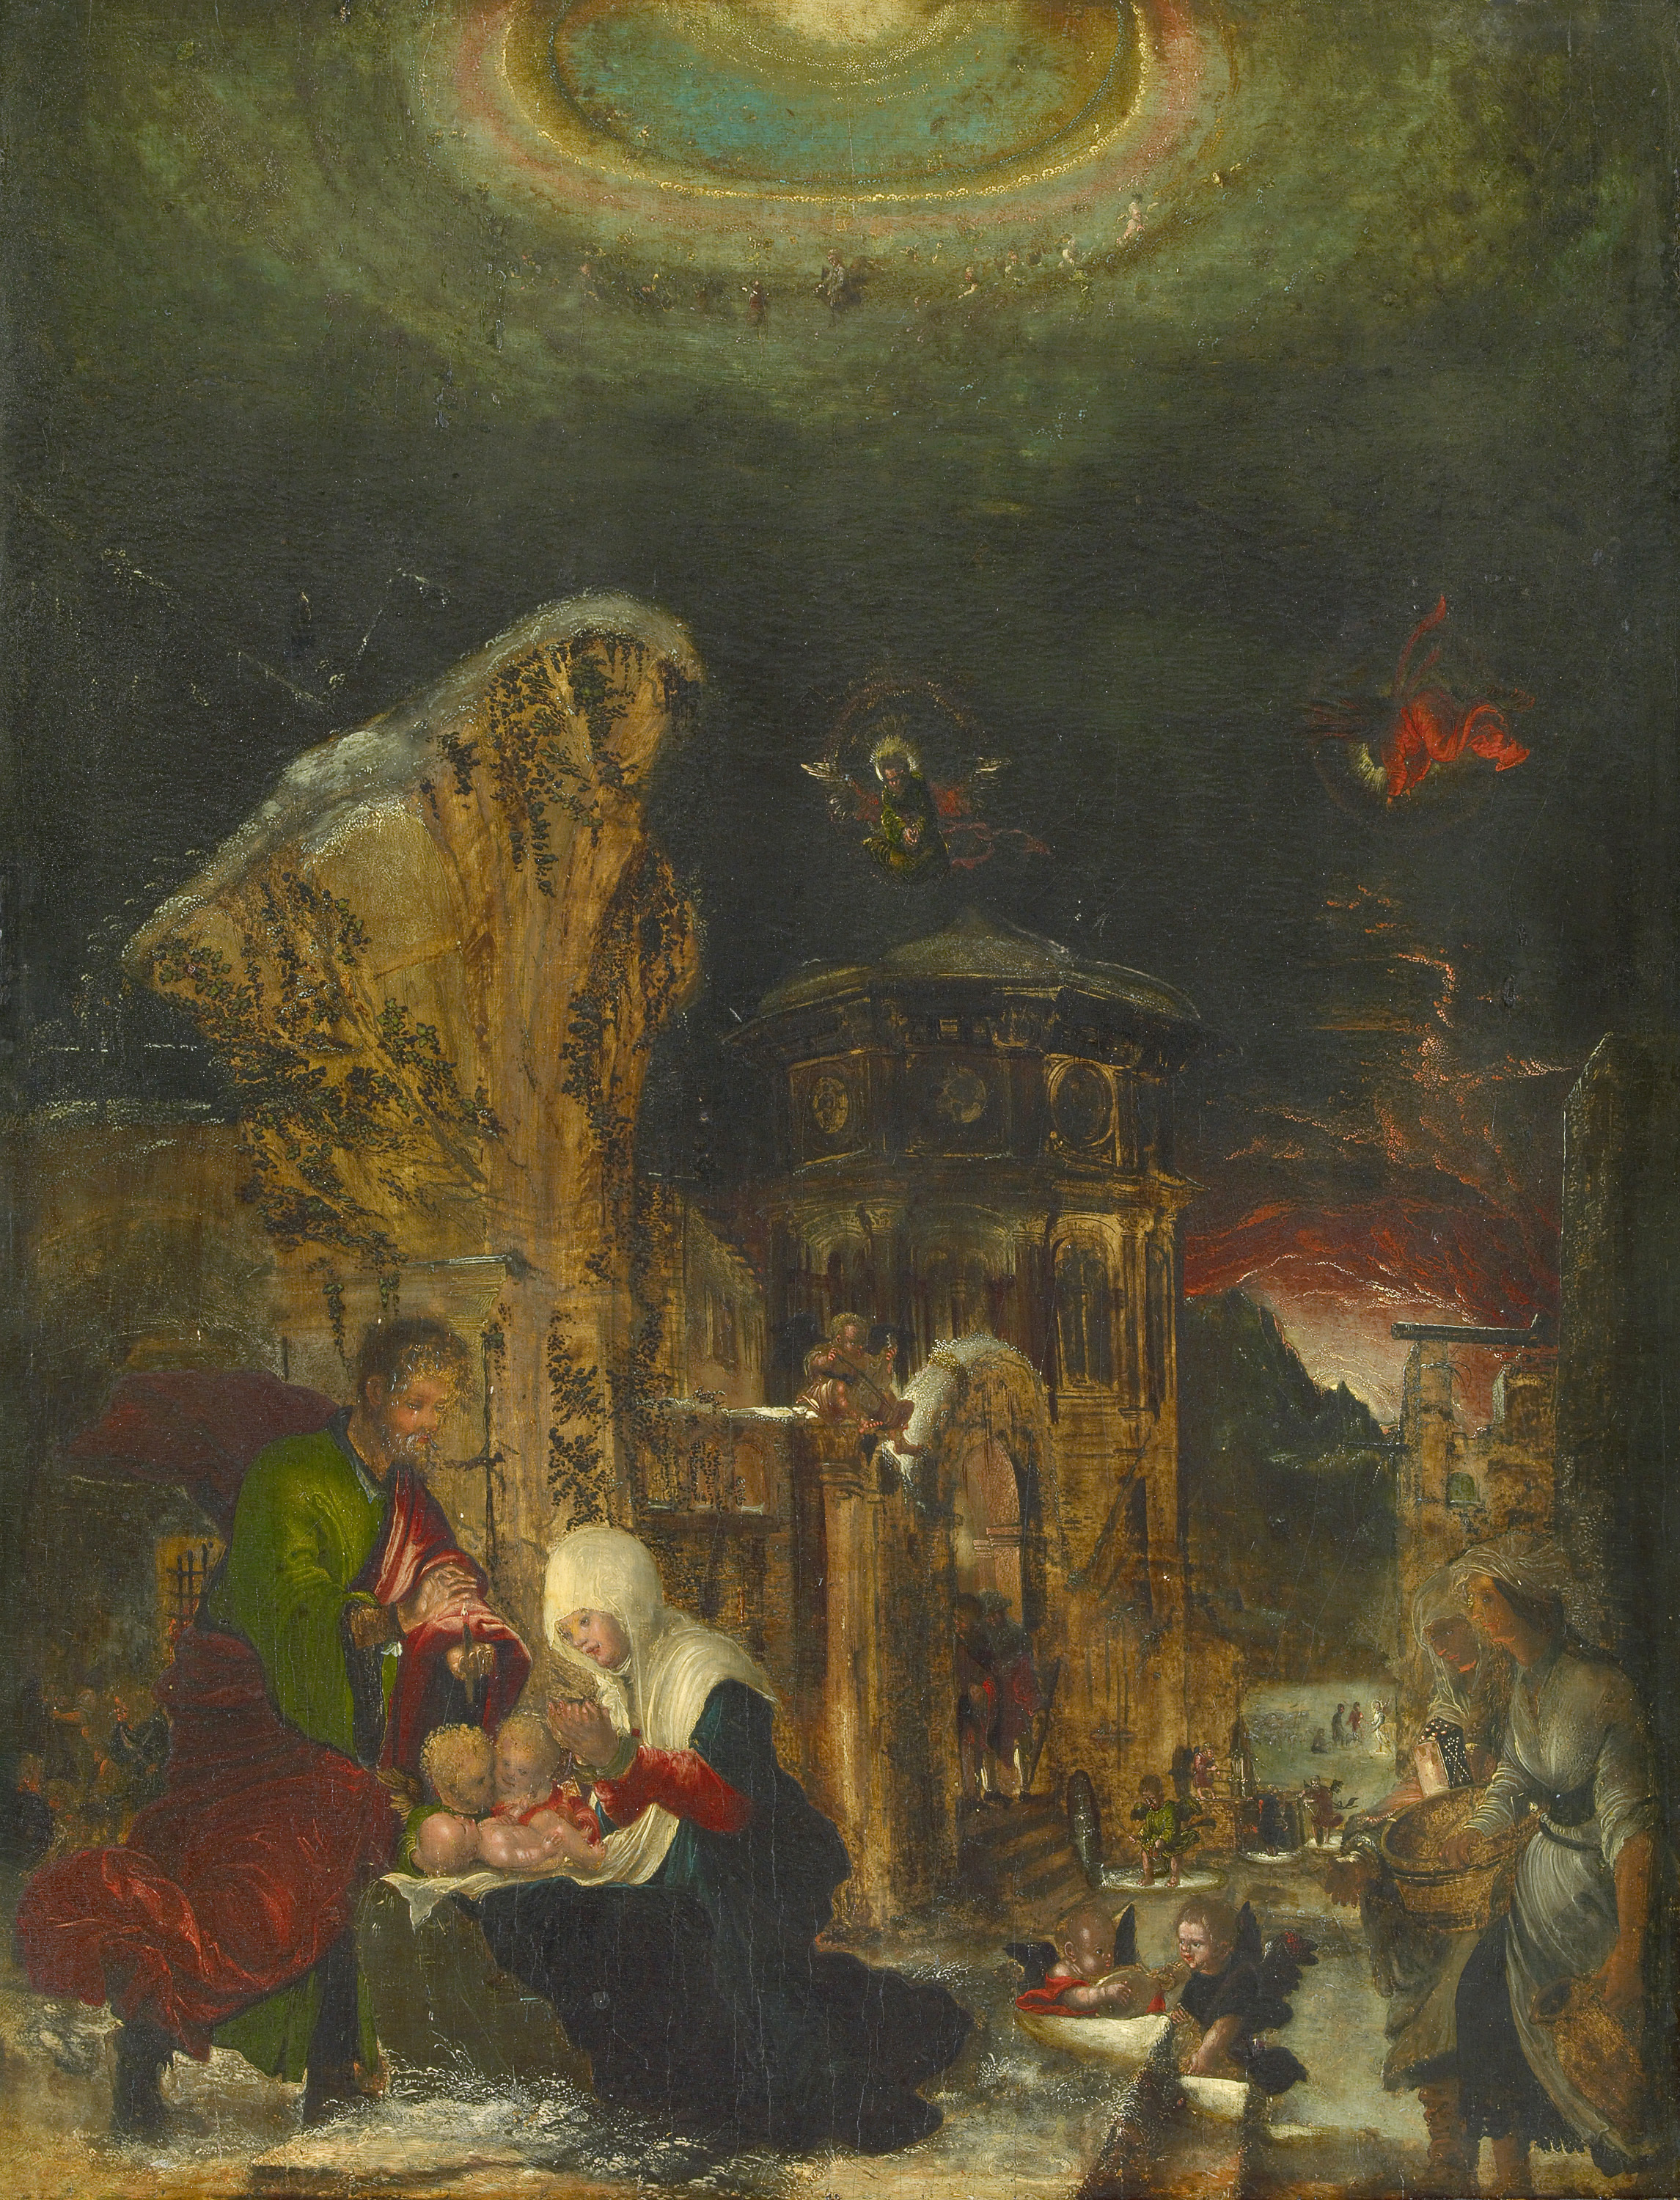 The Birth of Christ by Albrecht Altdorfer - about 1520/25 - 44,5 × 36,1 cm Kunsthistorisches Museum